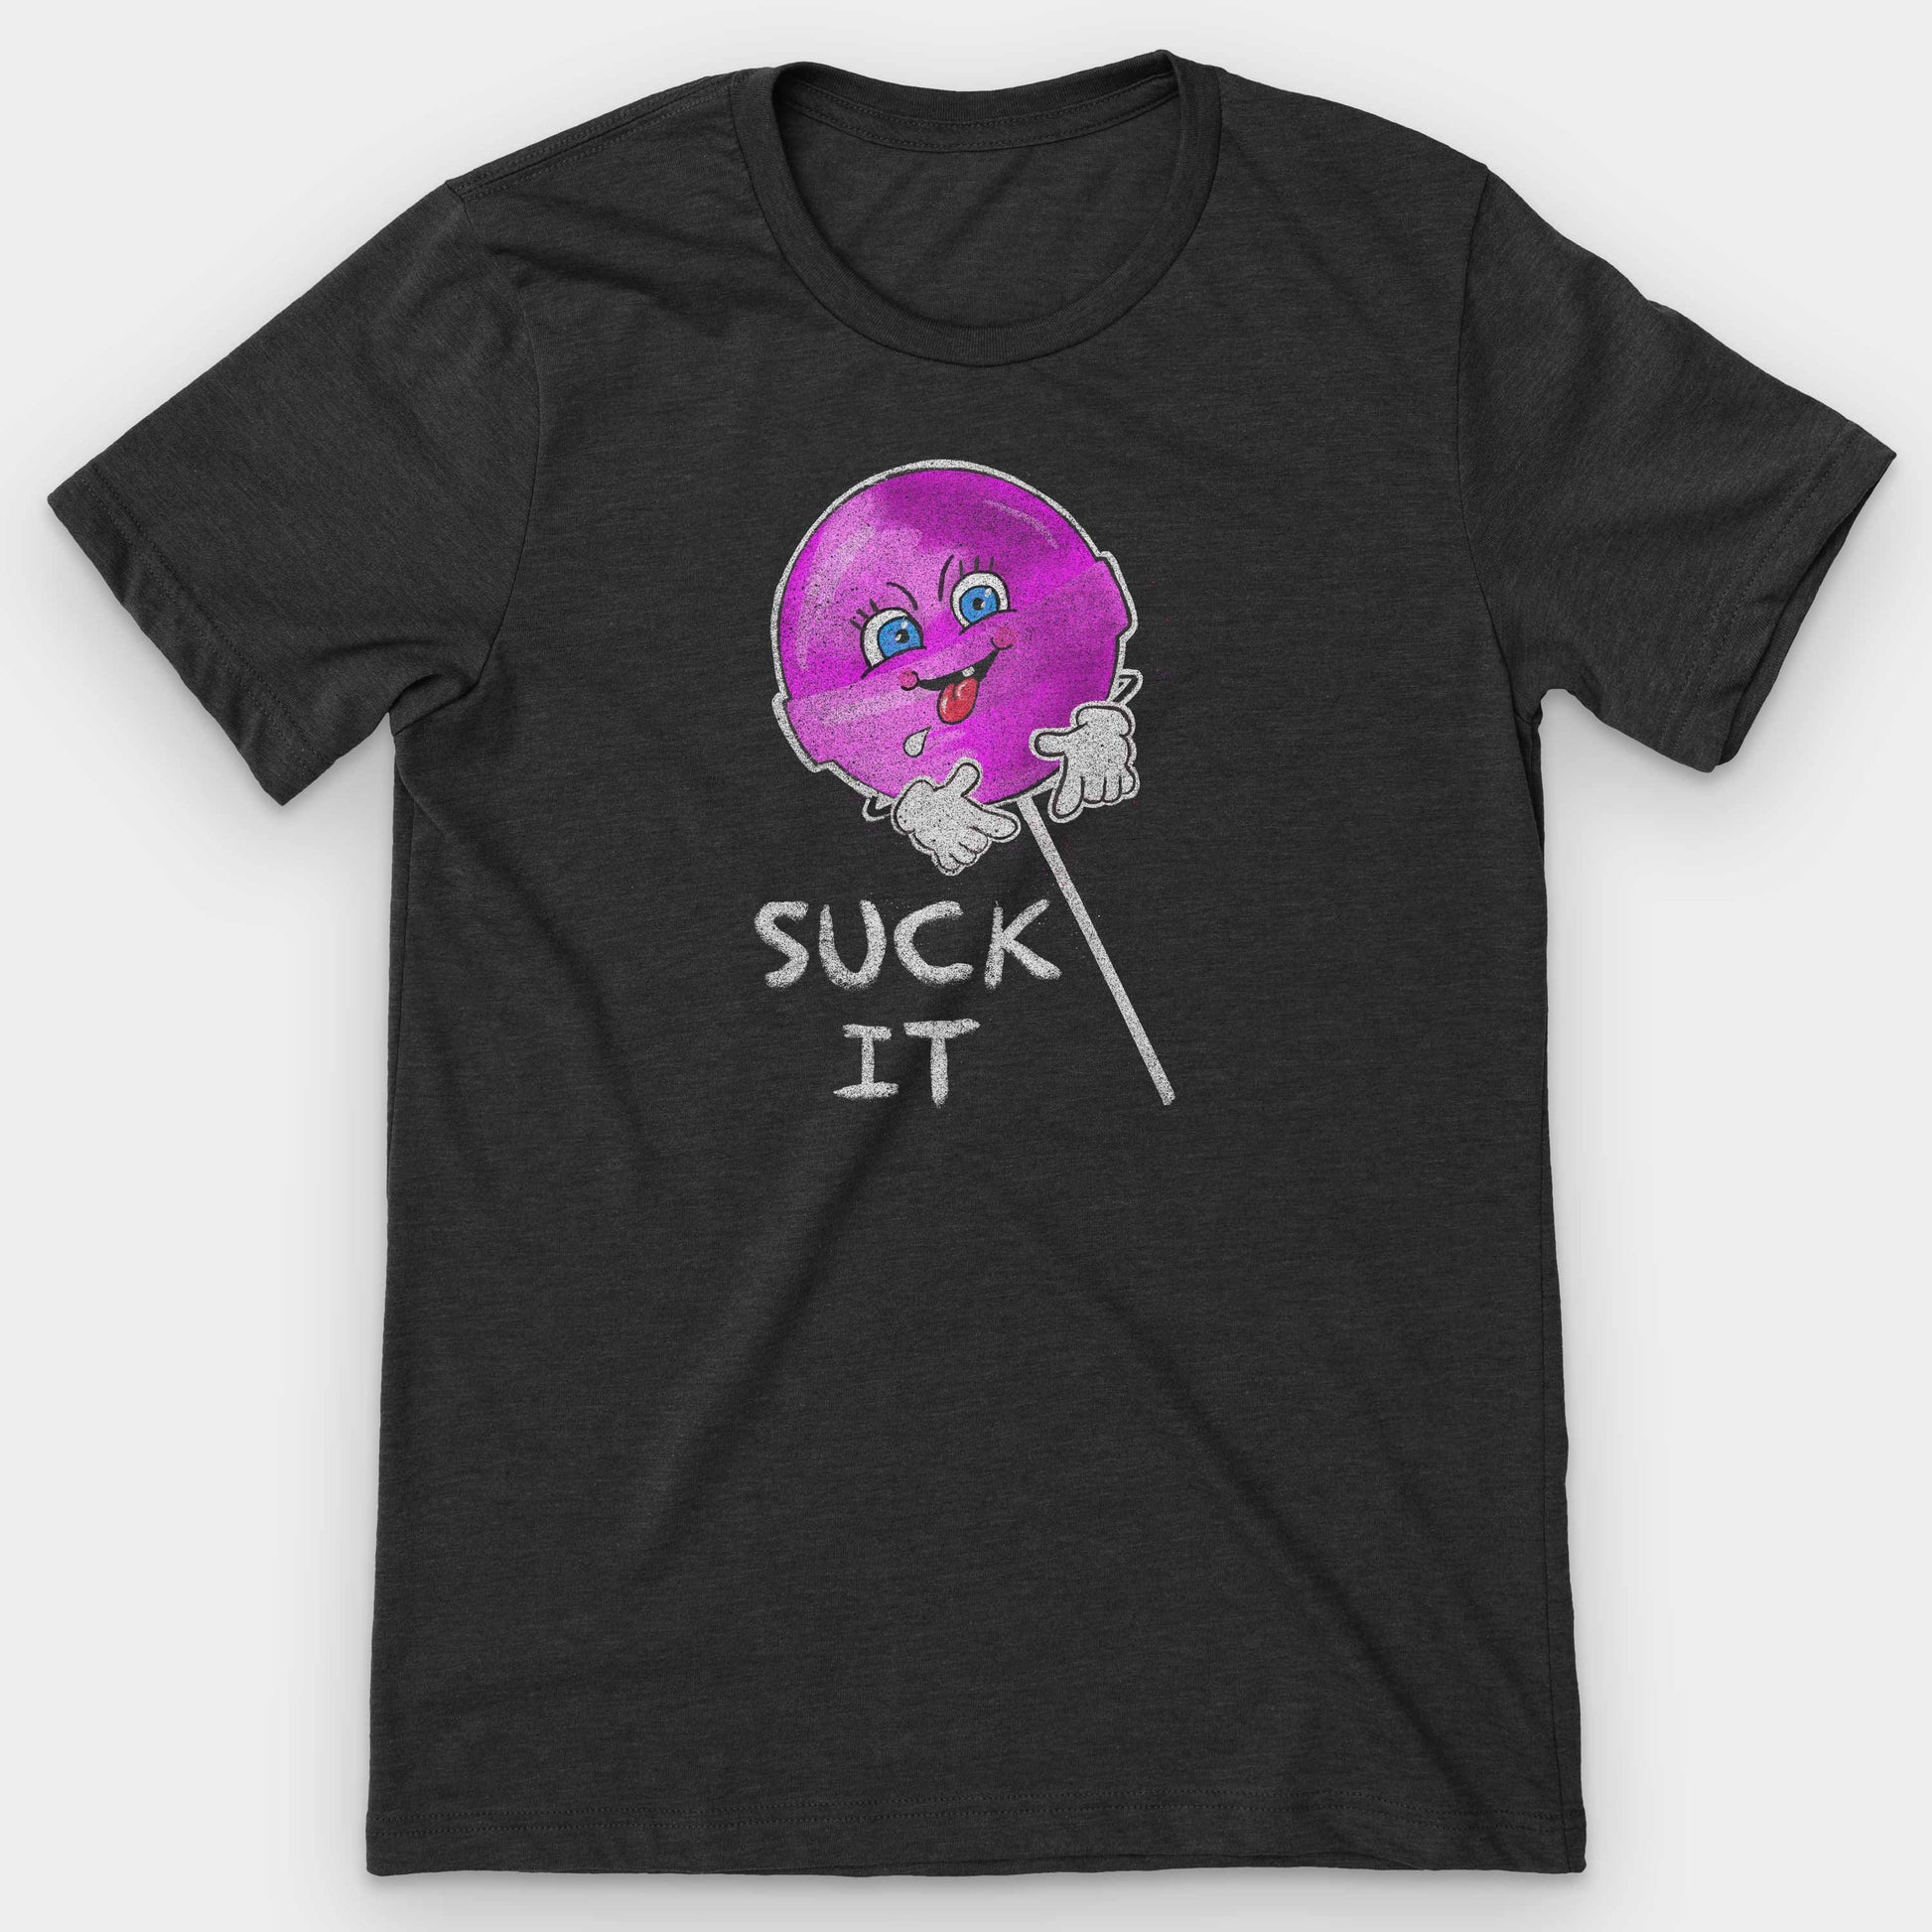 Black Heather Suck It Graphic T-Shirt by Snaxtime